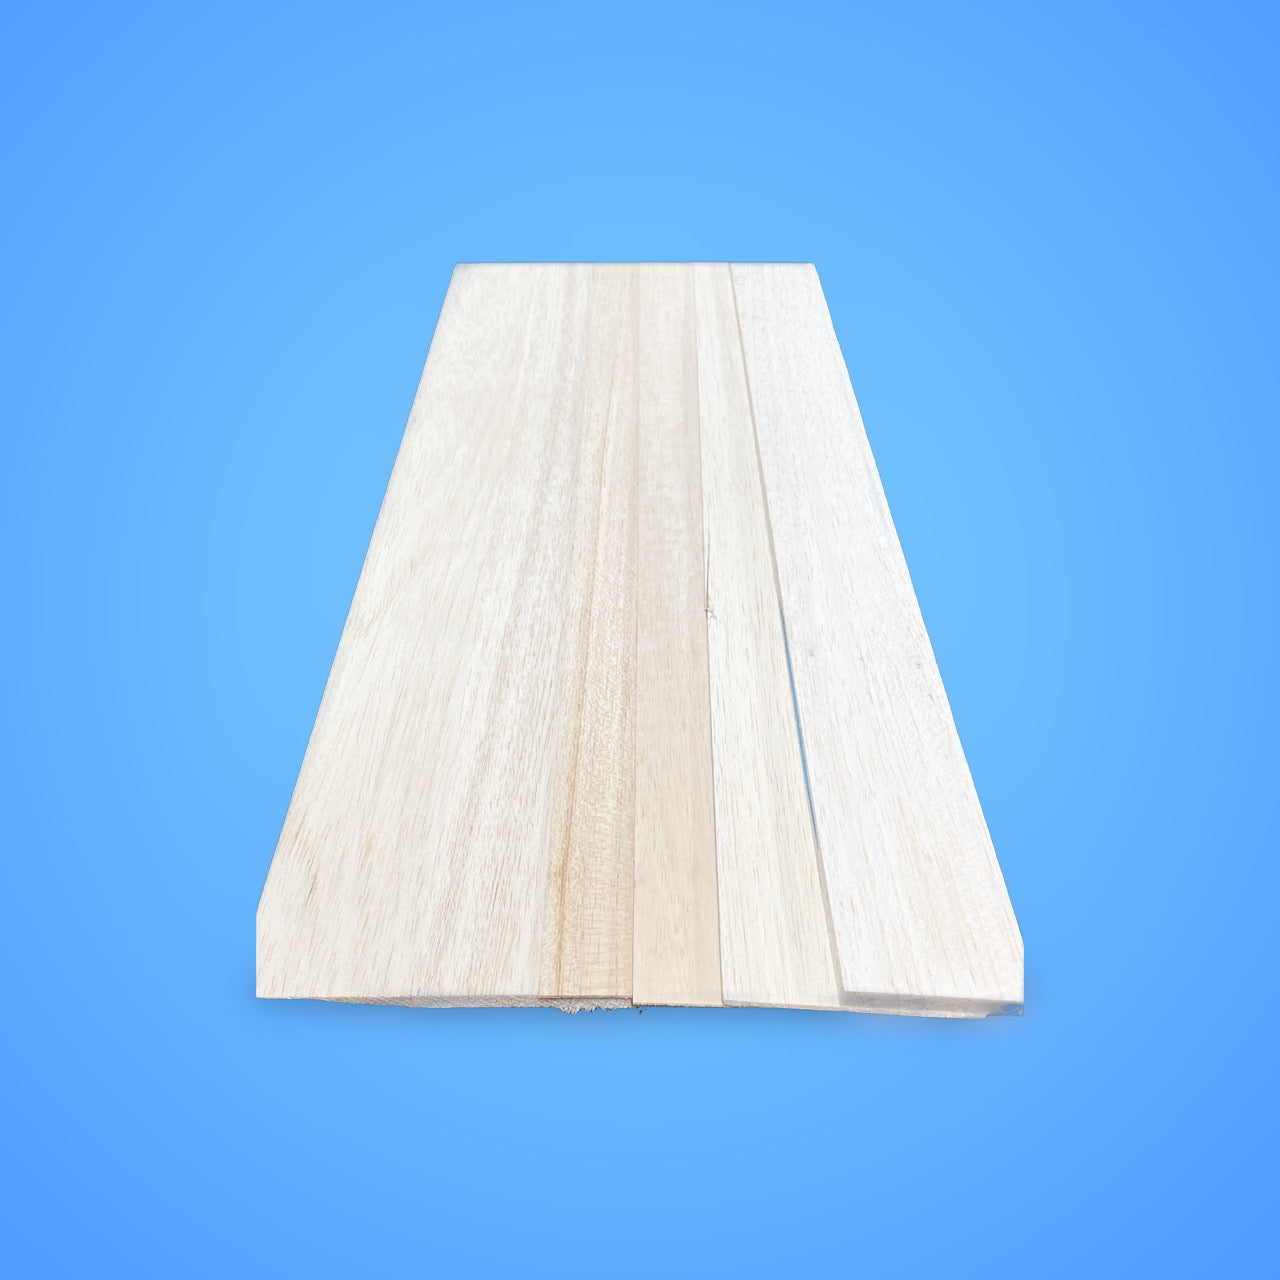 Hardwood Plywood, 4 in. x 12 in. x 1/8 in.